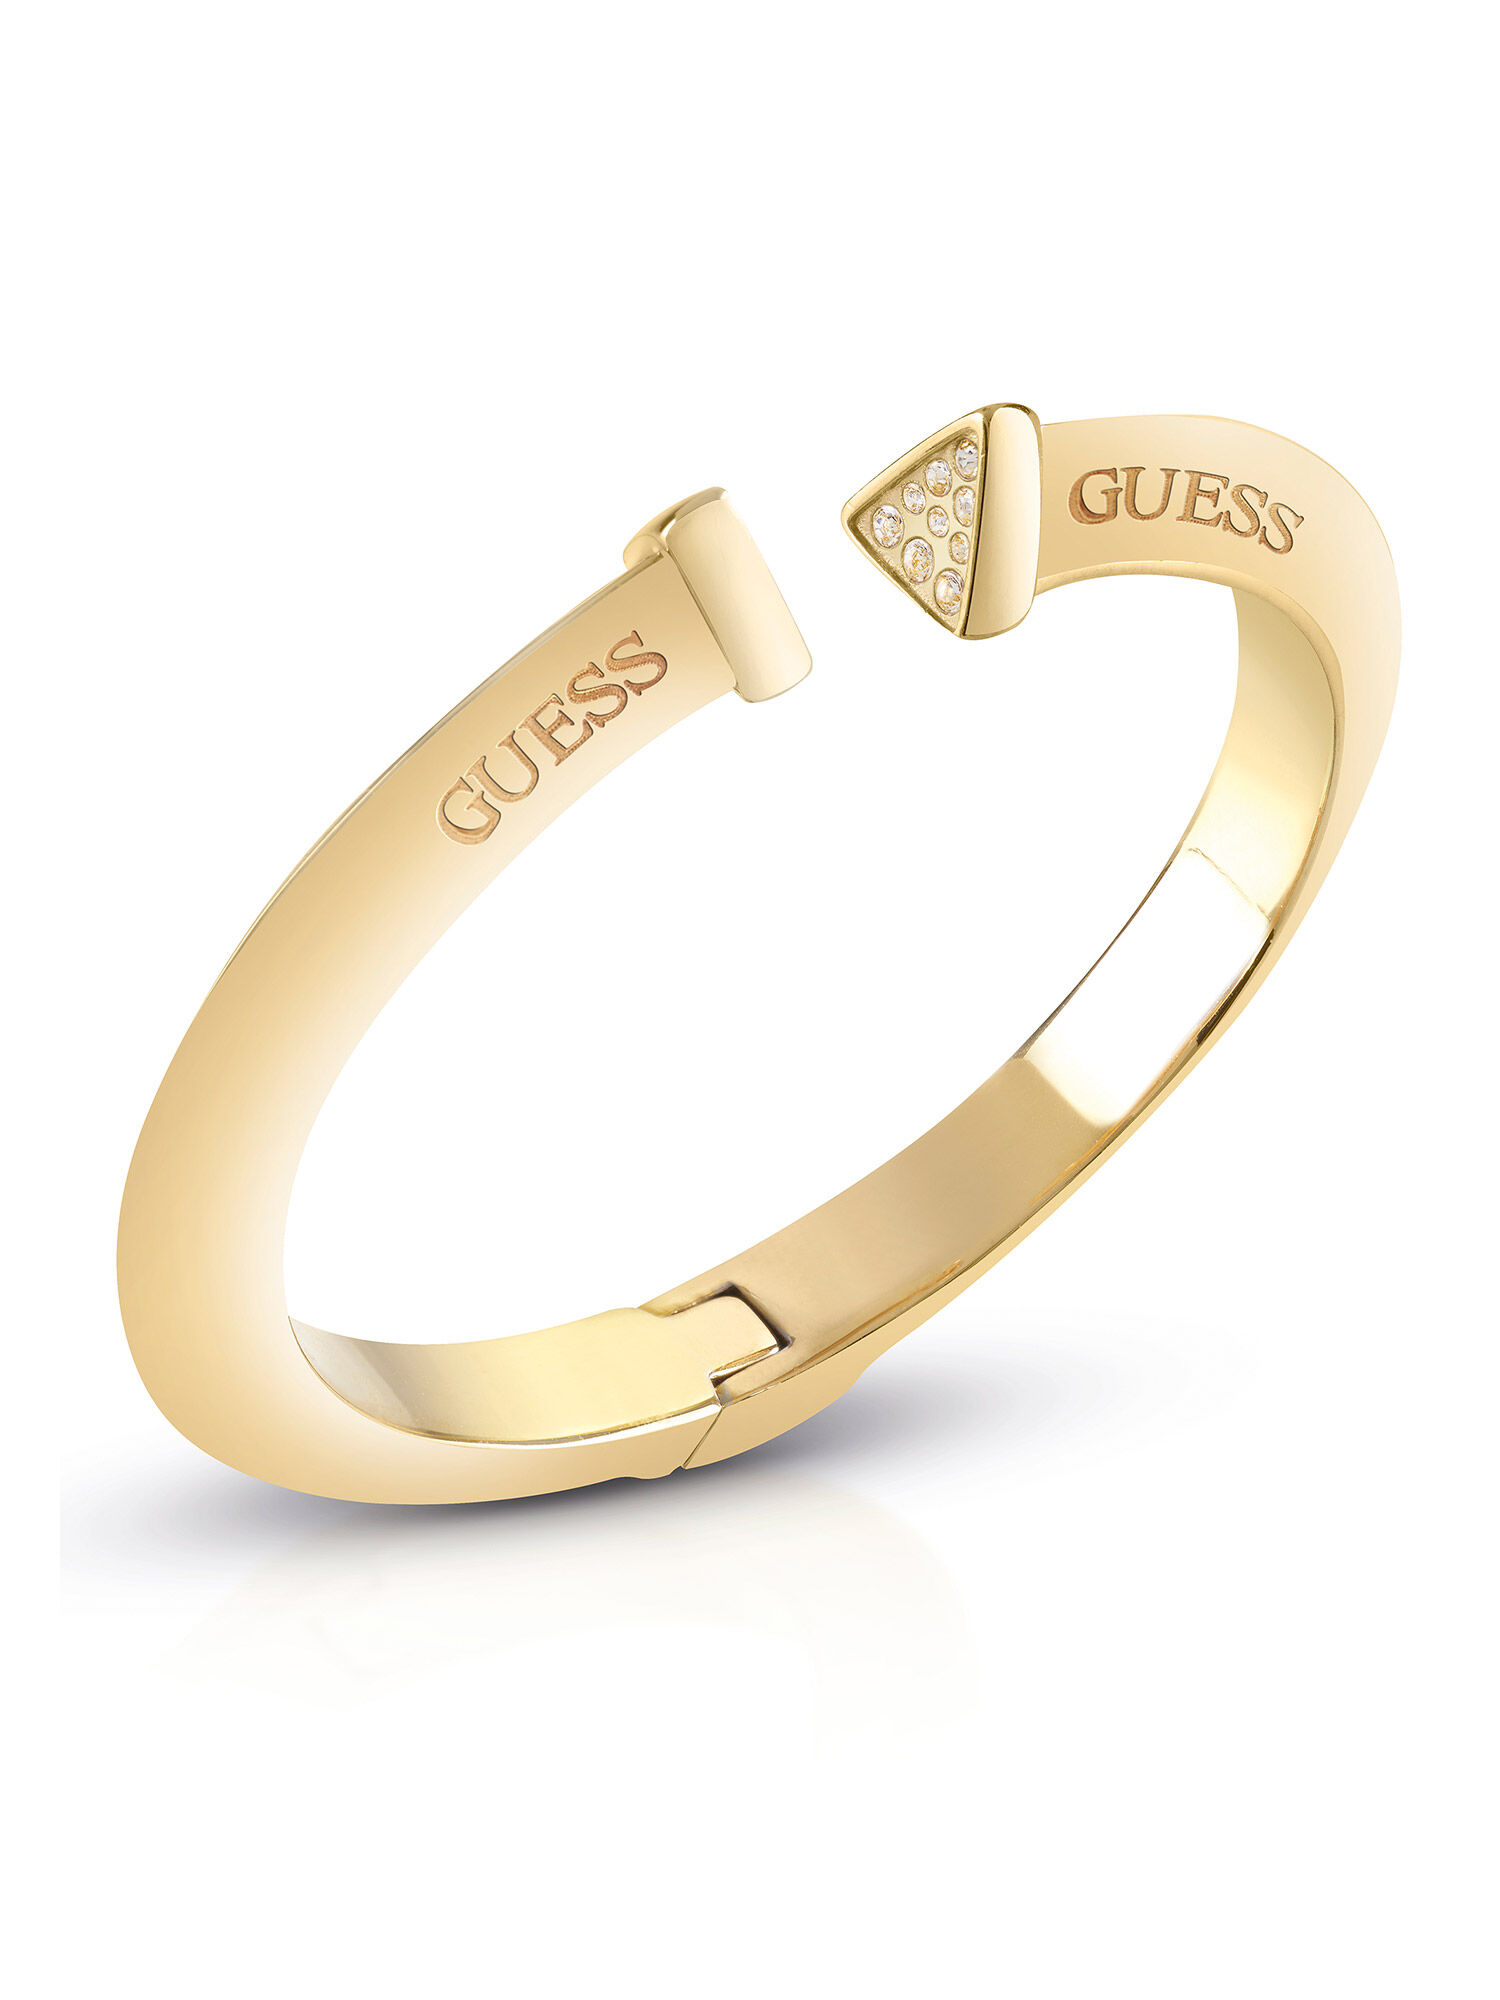 Quattro G Charm Toggle Bracelet | GUESS